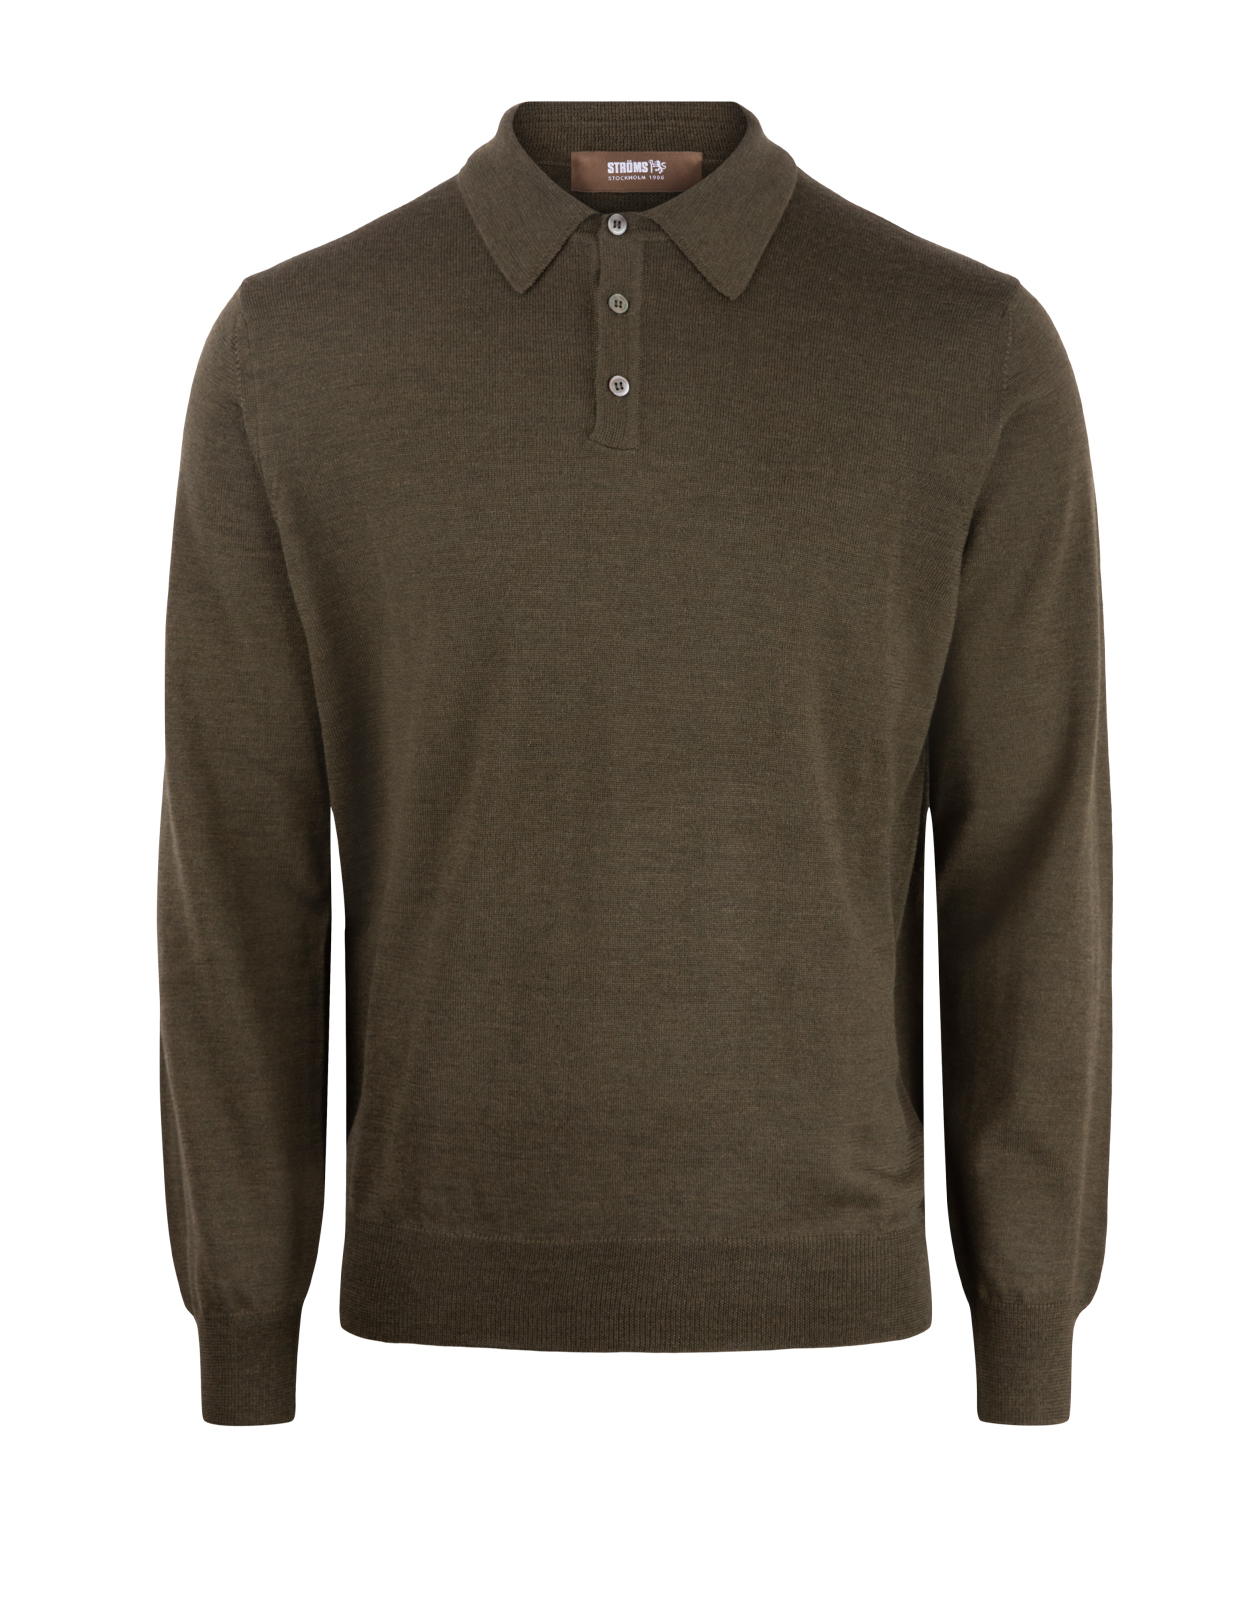 Poloshirt Merino Sweater Olive Green Stl 3XL